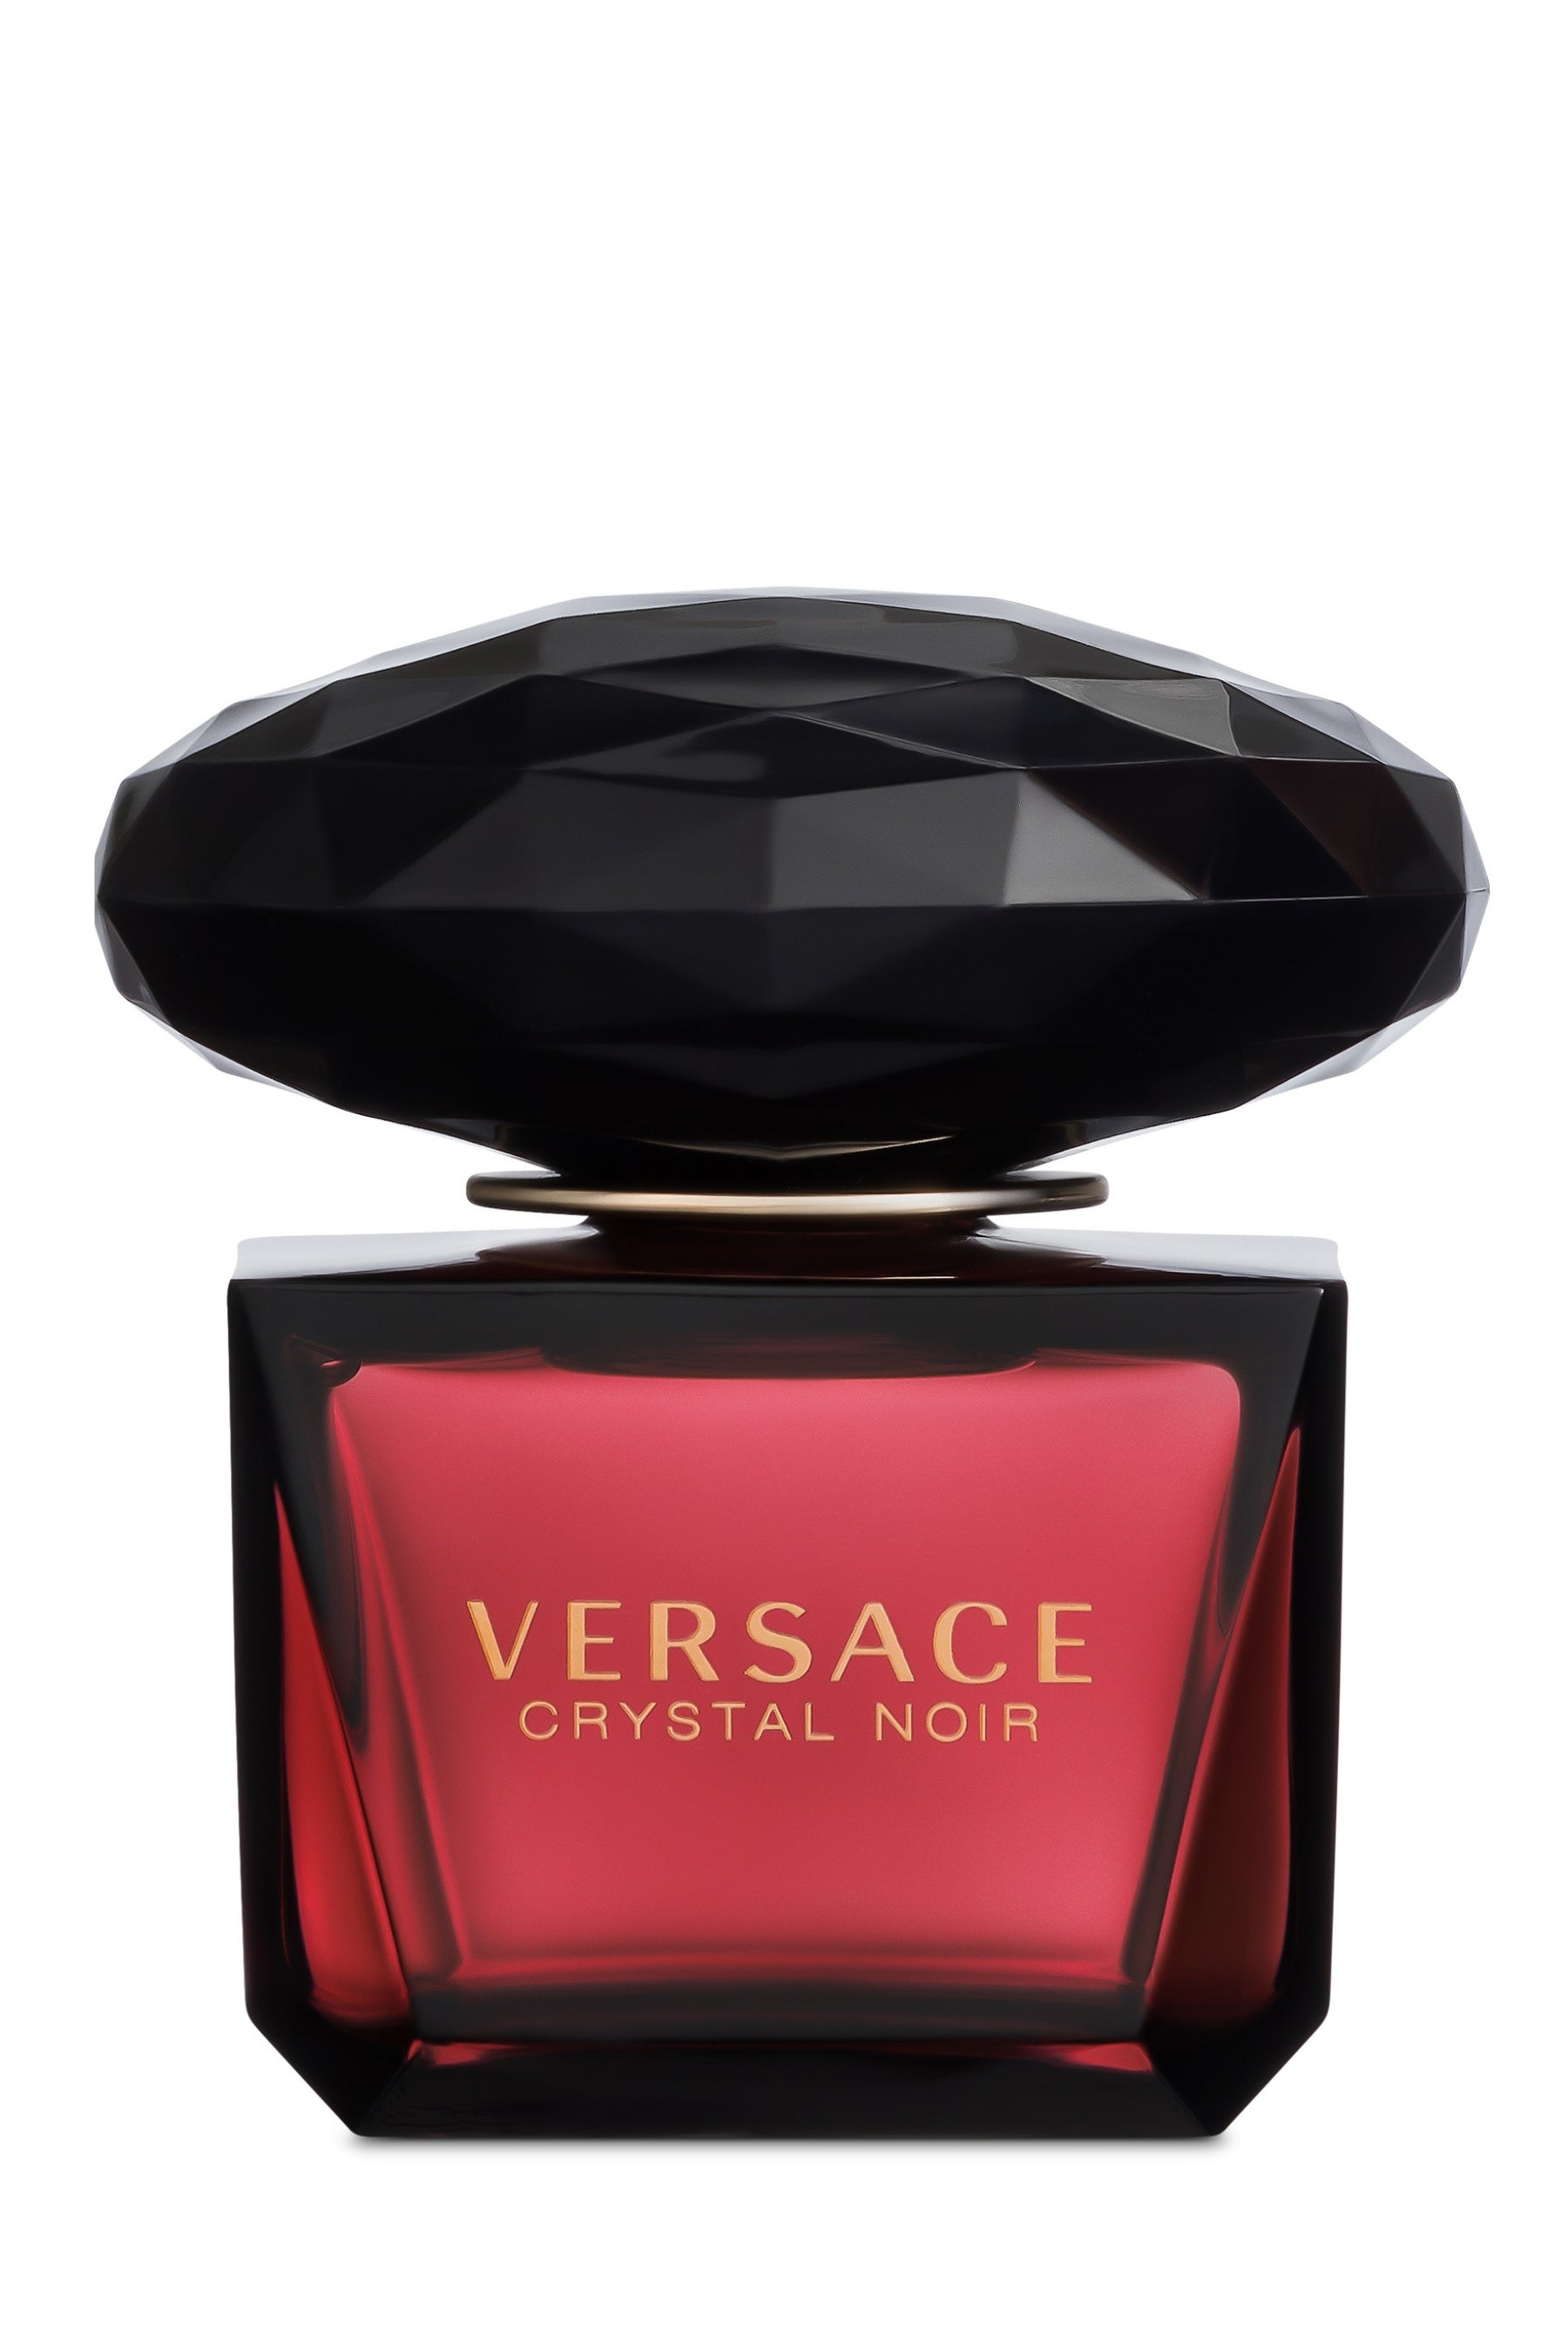 Crystal Noir By Versace EDP Perfume (Discontinued) – Splash Fragrance